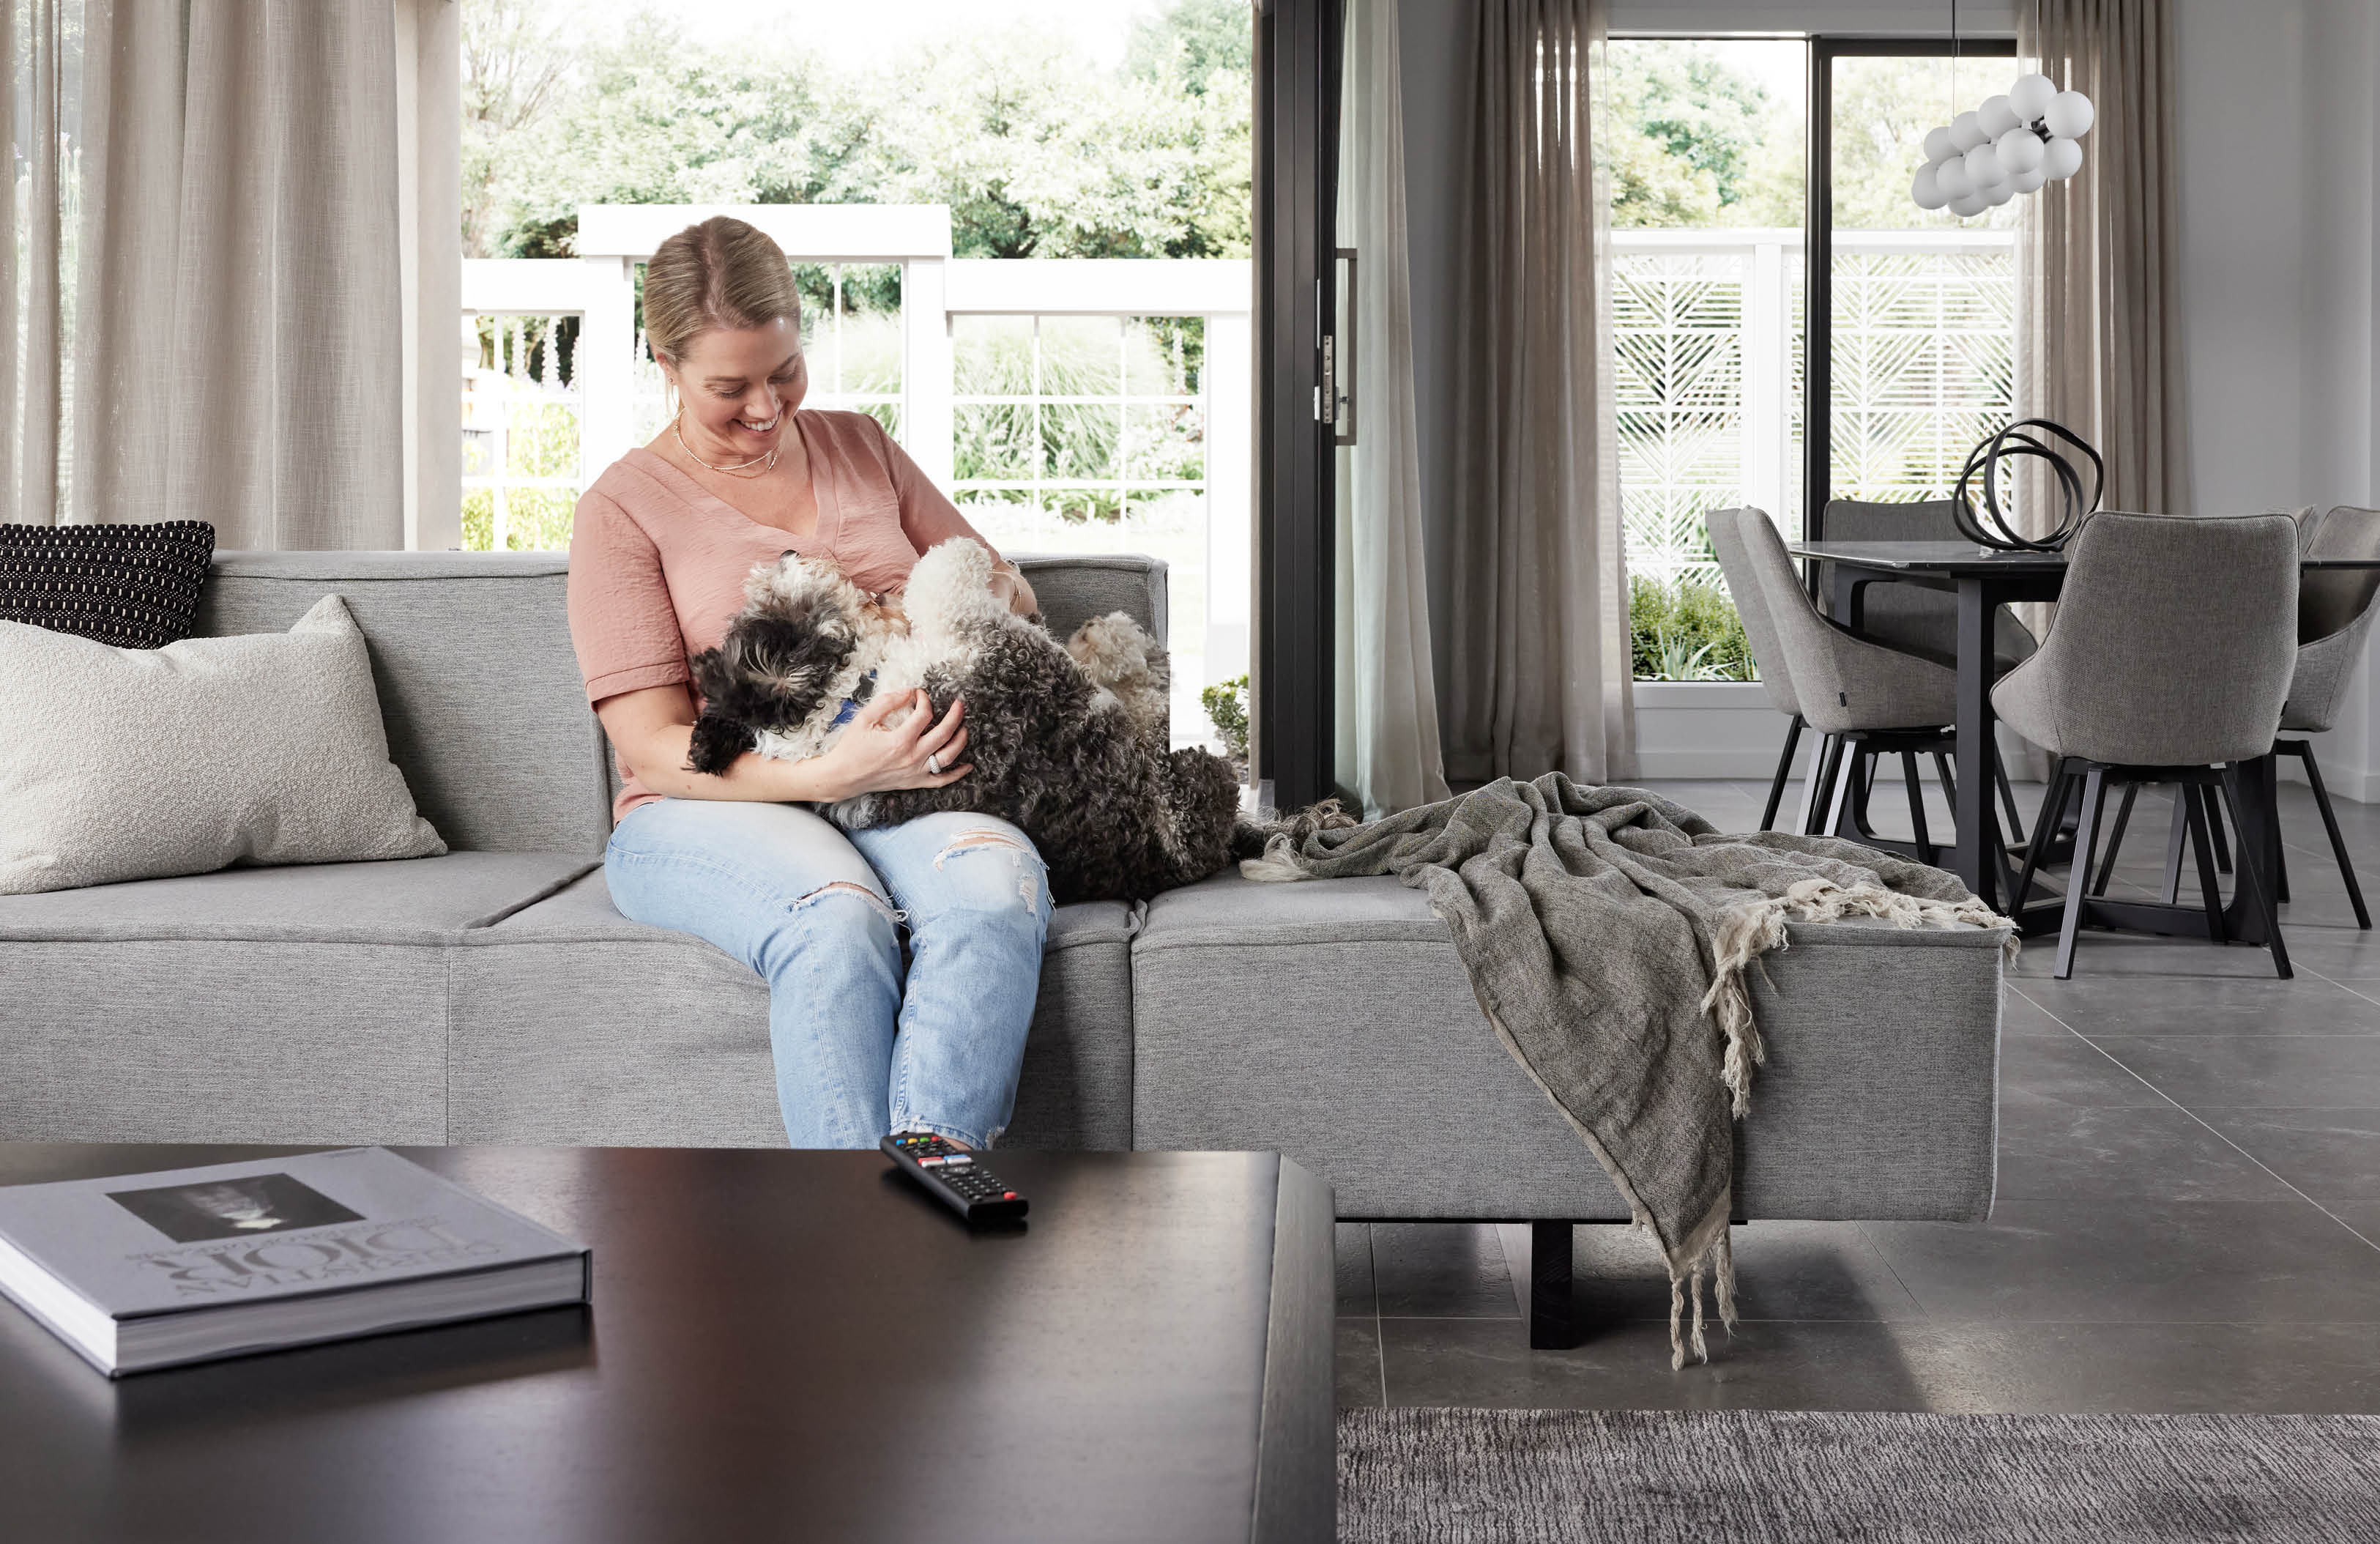 CHB462 - Living with pets - Pet-friendly interior design ideas_Body1.jpg